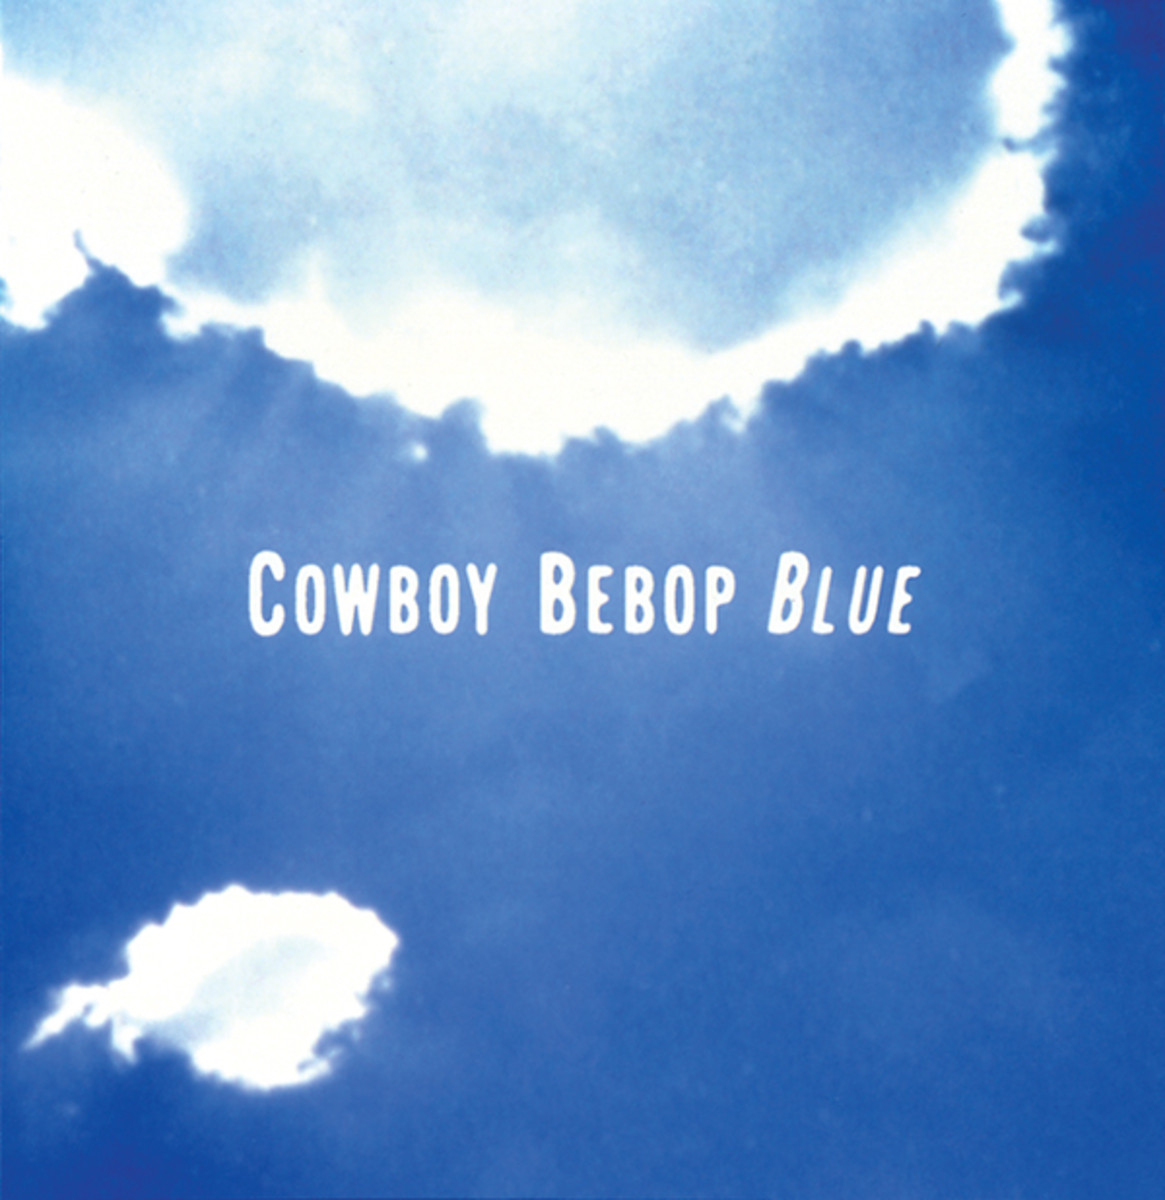  imagen Cowboy Bebop: OST 1 Original Soundtrack I